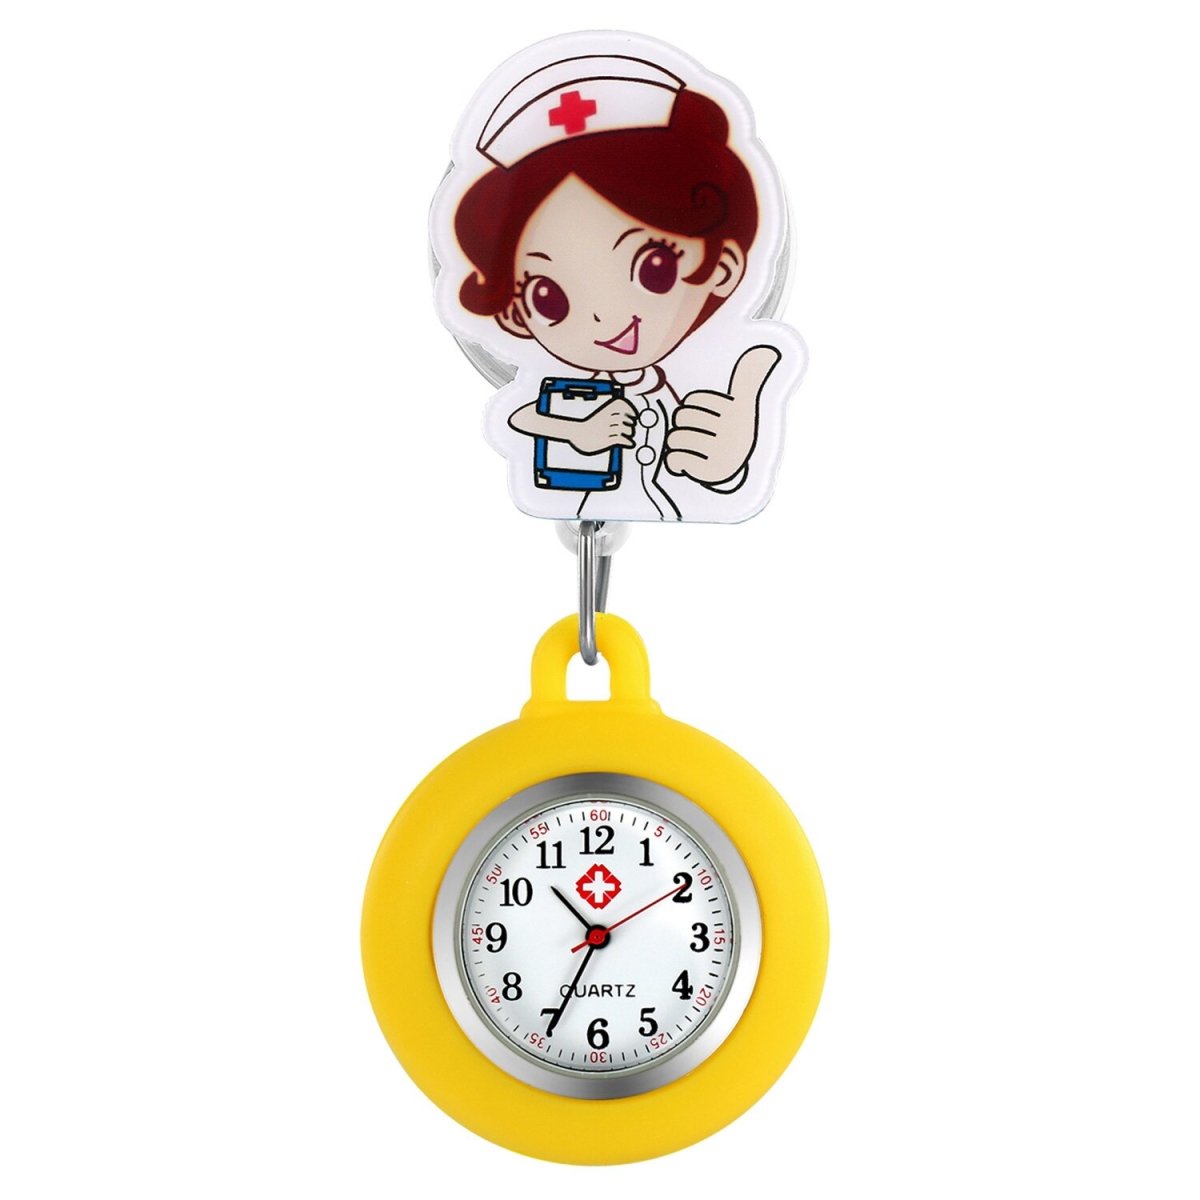 Nurse Watch - Manga Doctor Pin Watch - Pocket Watch Net